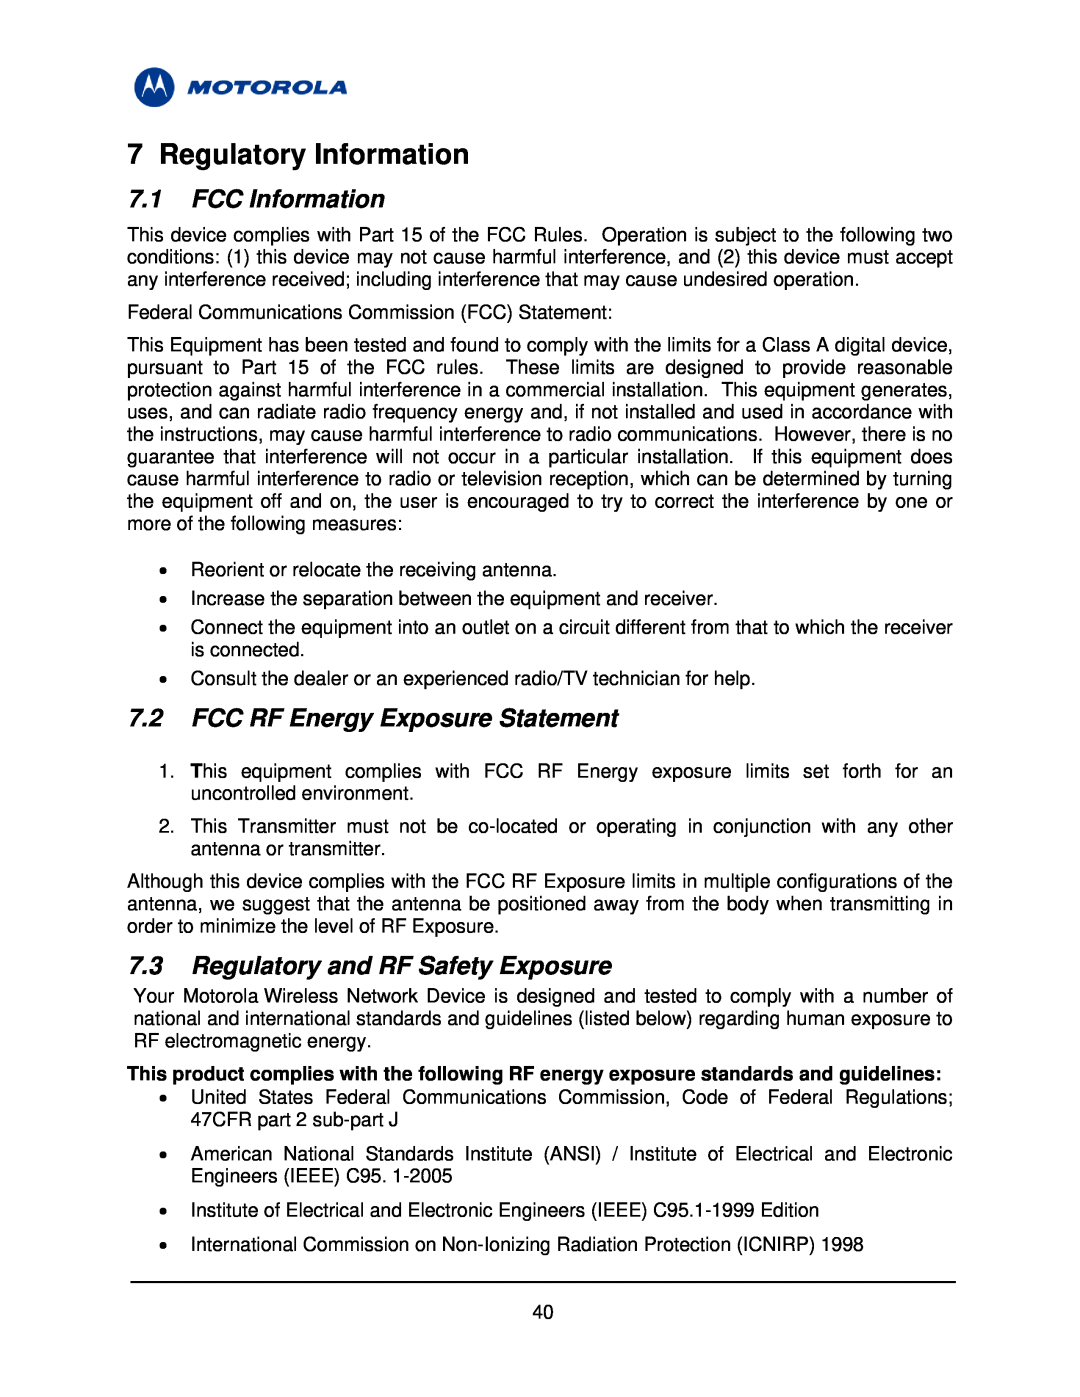 Motorola 3.1 Regulatory Information, FCC Information, FCC RF Energy Exposure Statement, Regulatory and RF Safety Exposure 